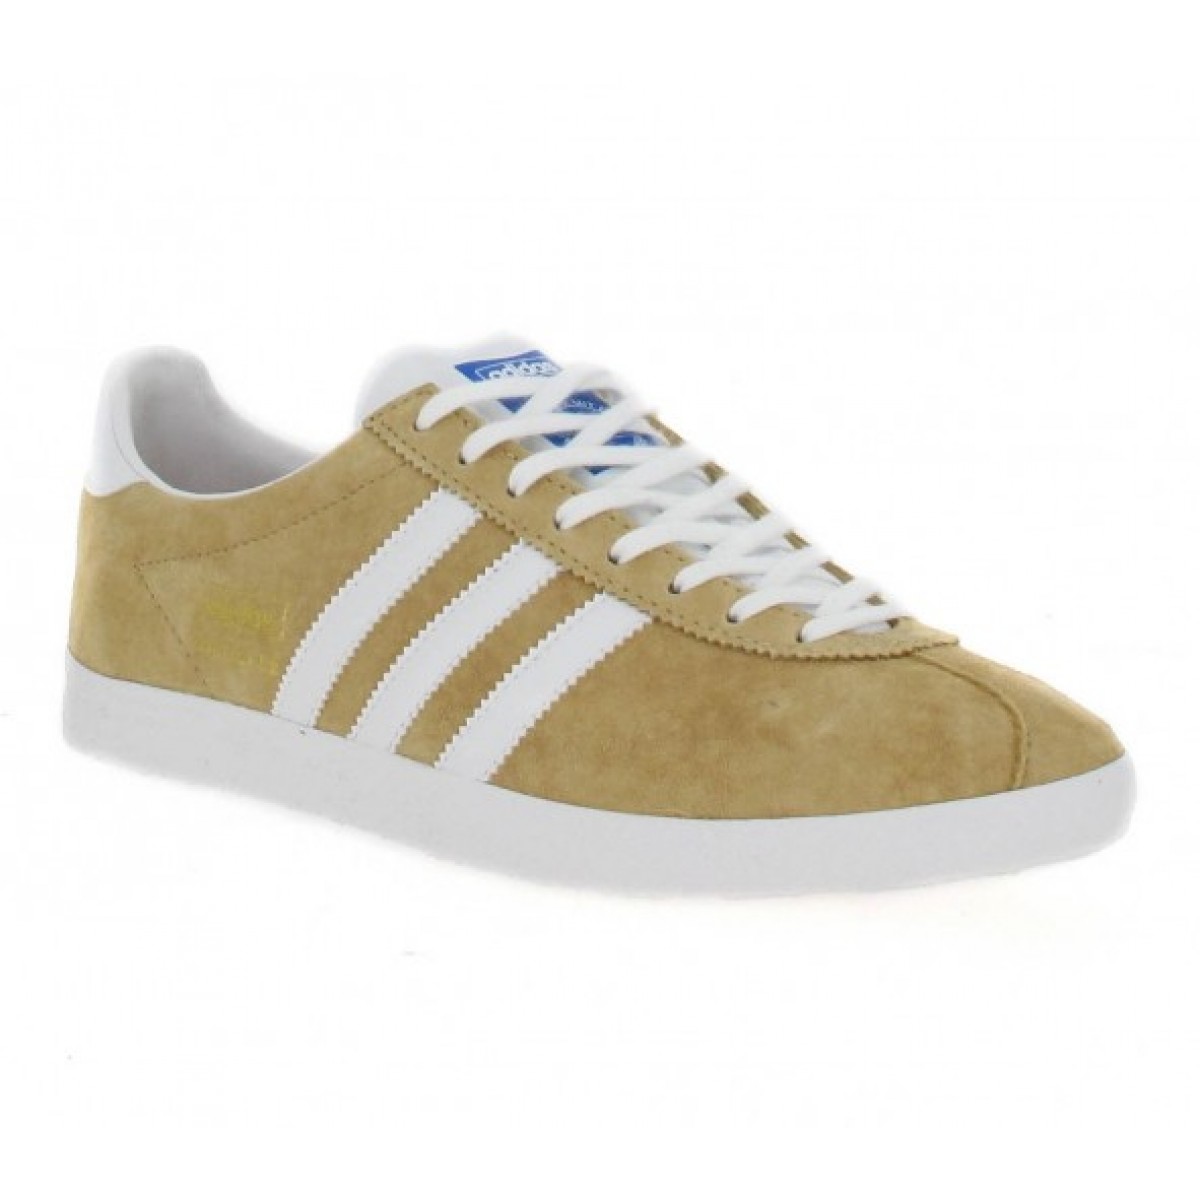 Adidas gazelle velours femme beige blanc | Fanny chaussures